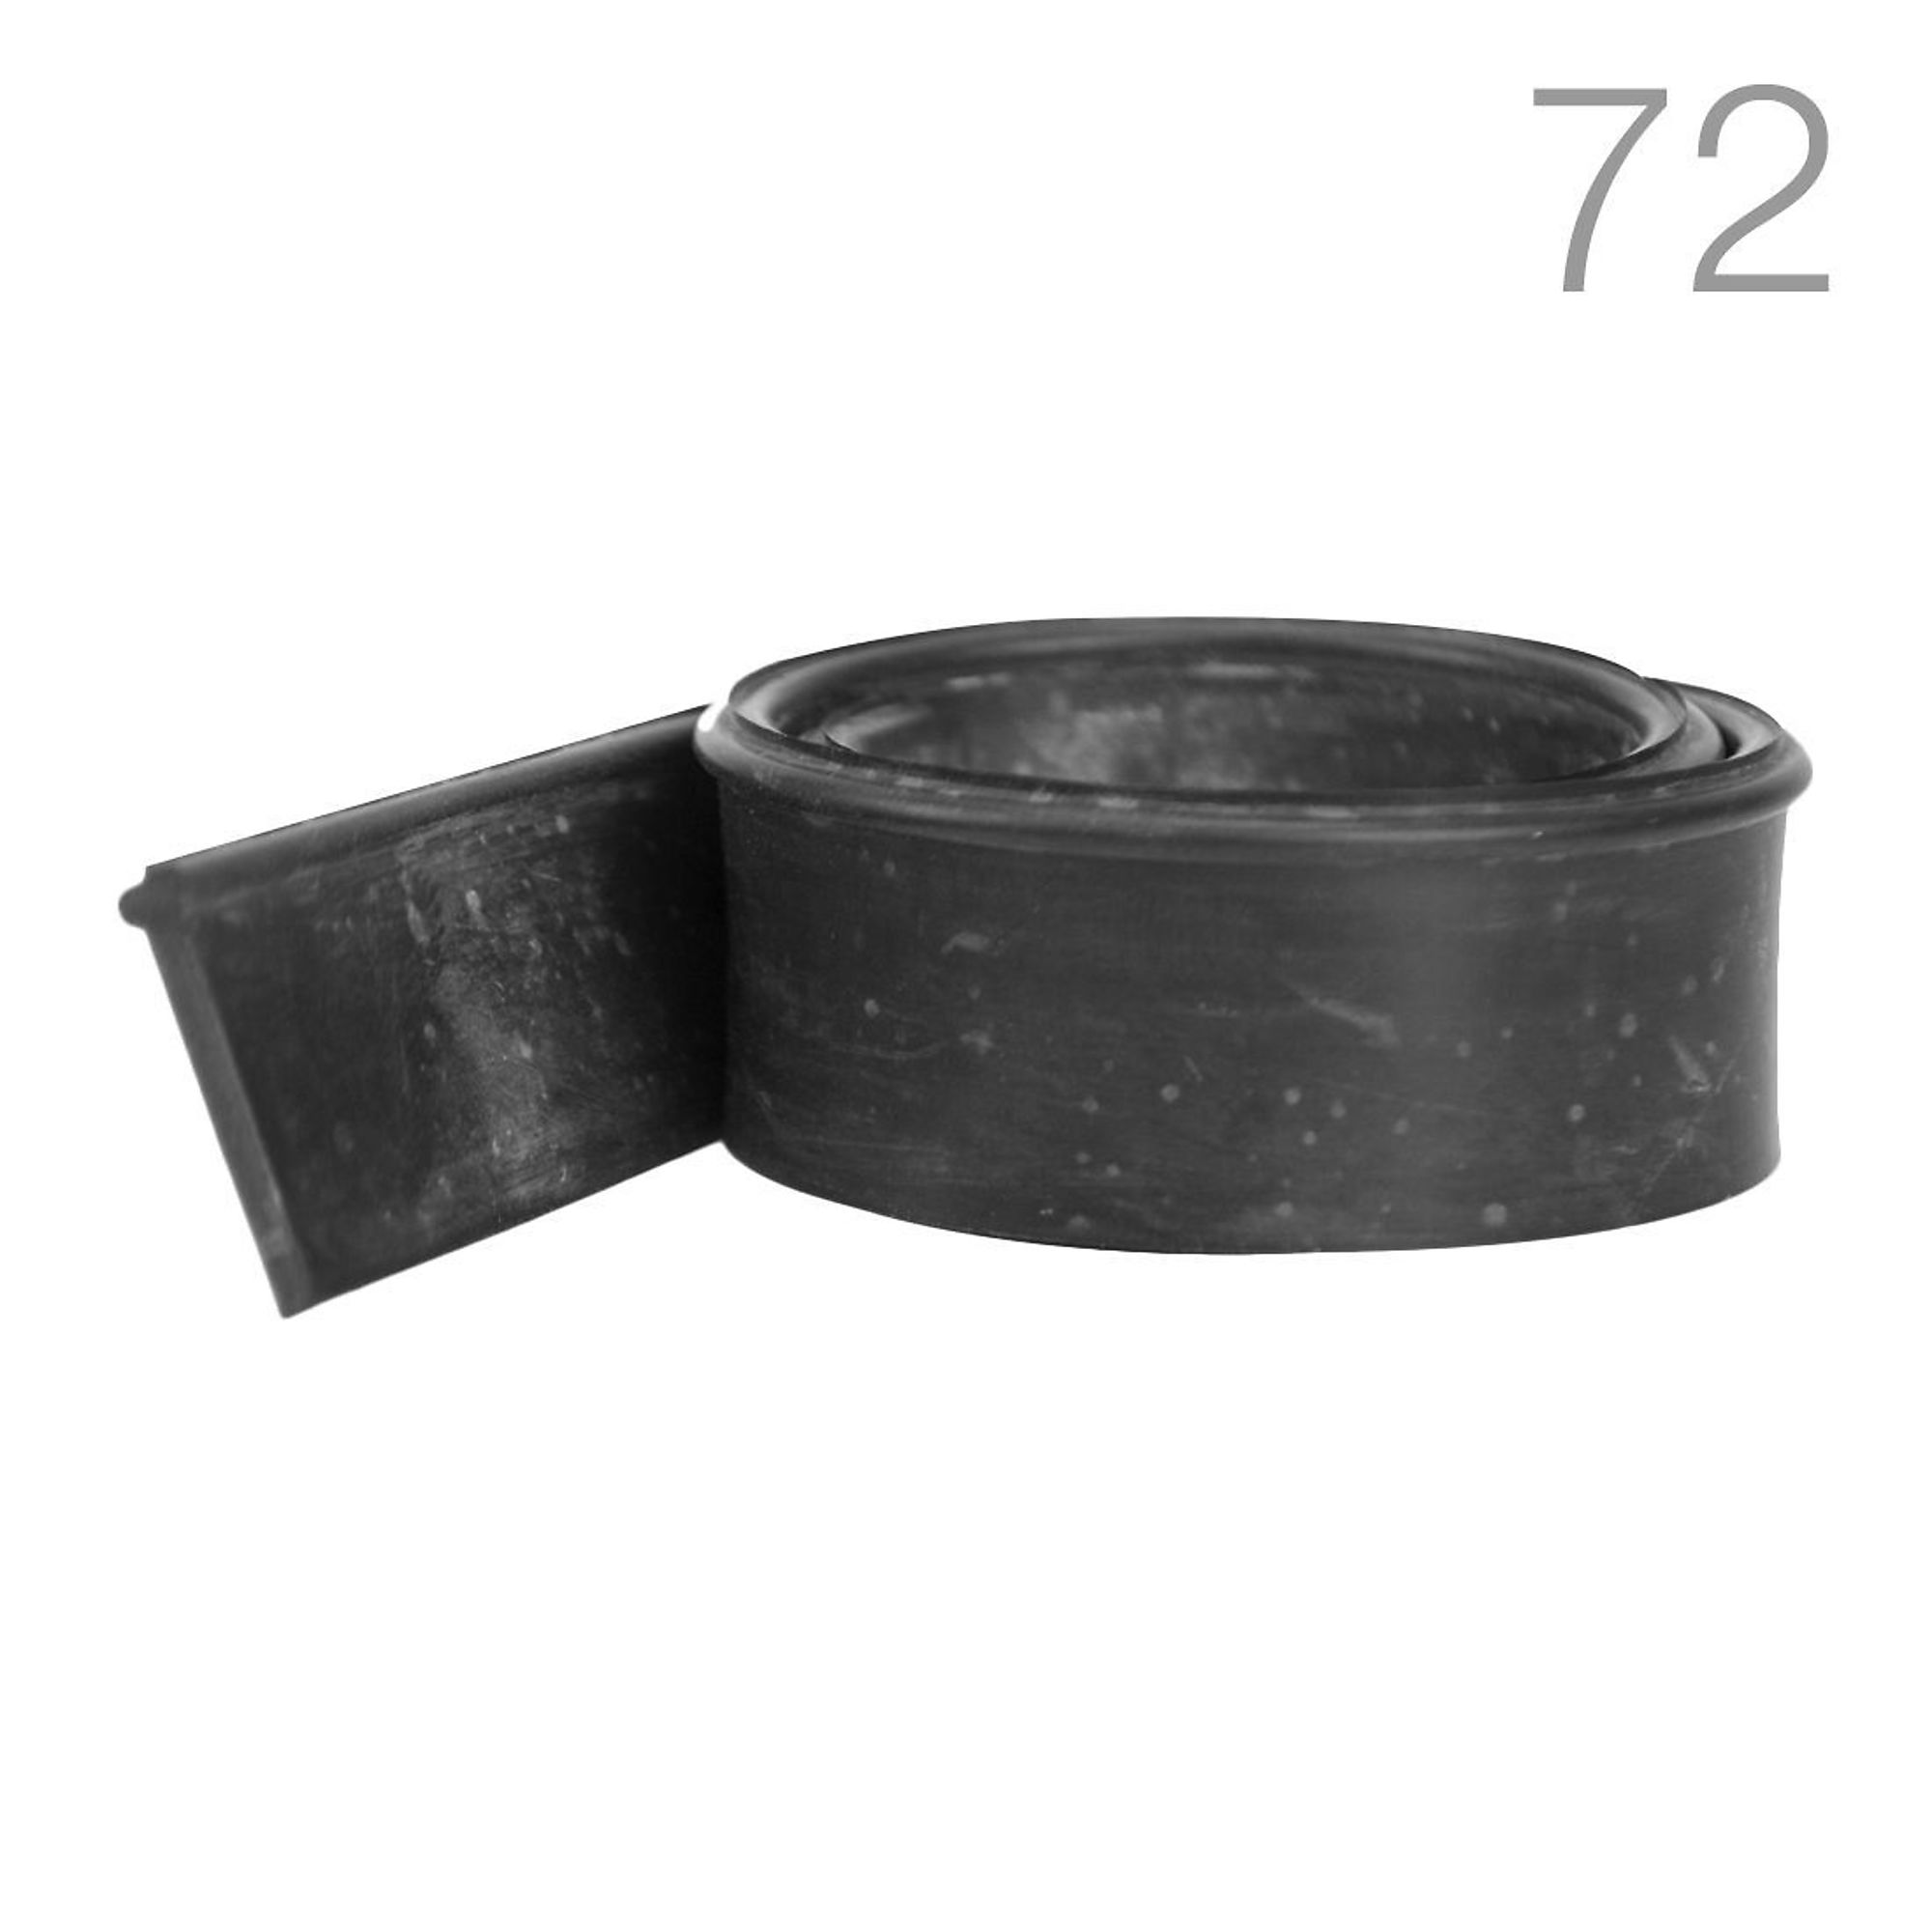 BlackDiamond, Flat Top Medium Squeegee Rubber 1/2 Gross - 22Inch, Model 012-05-122